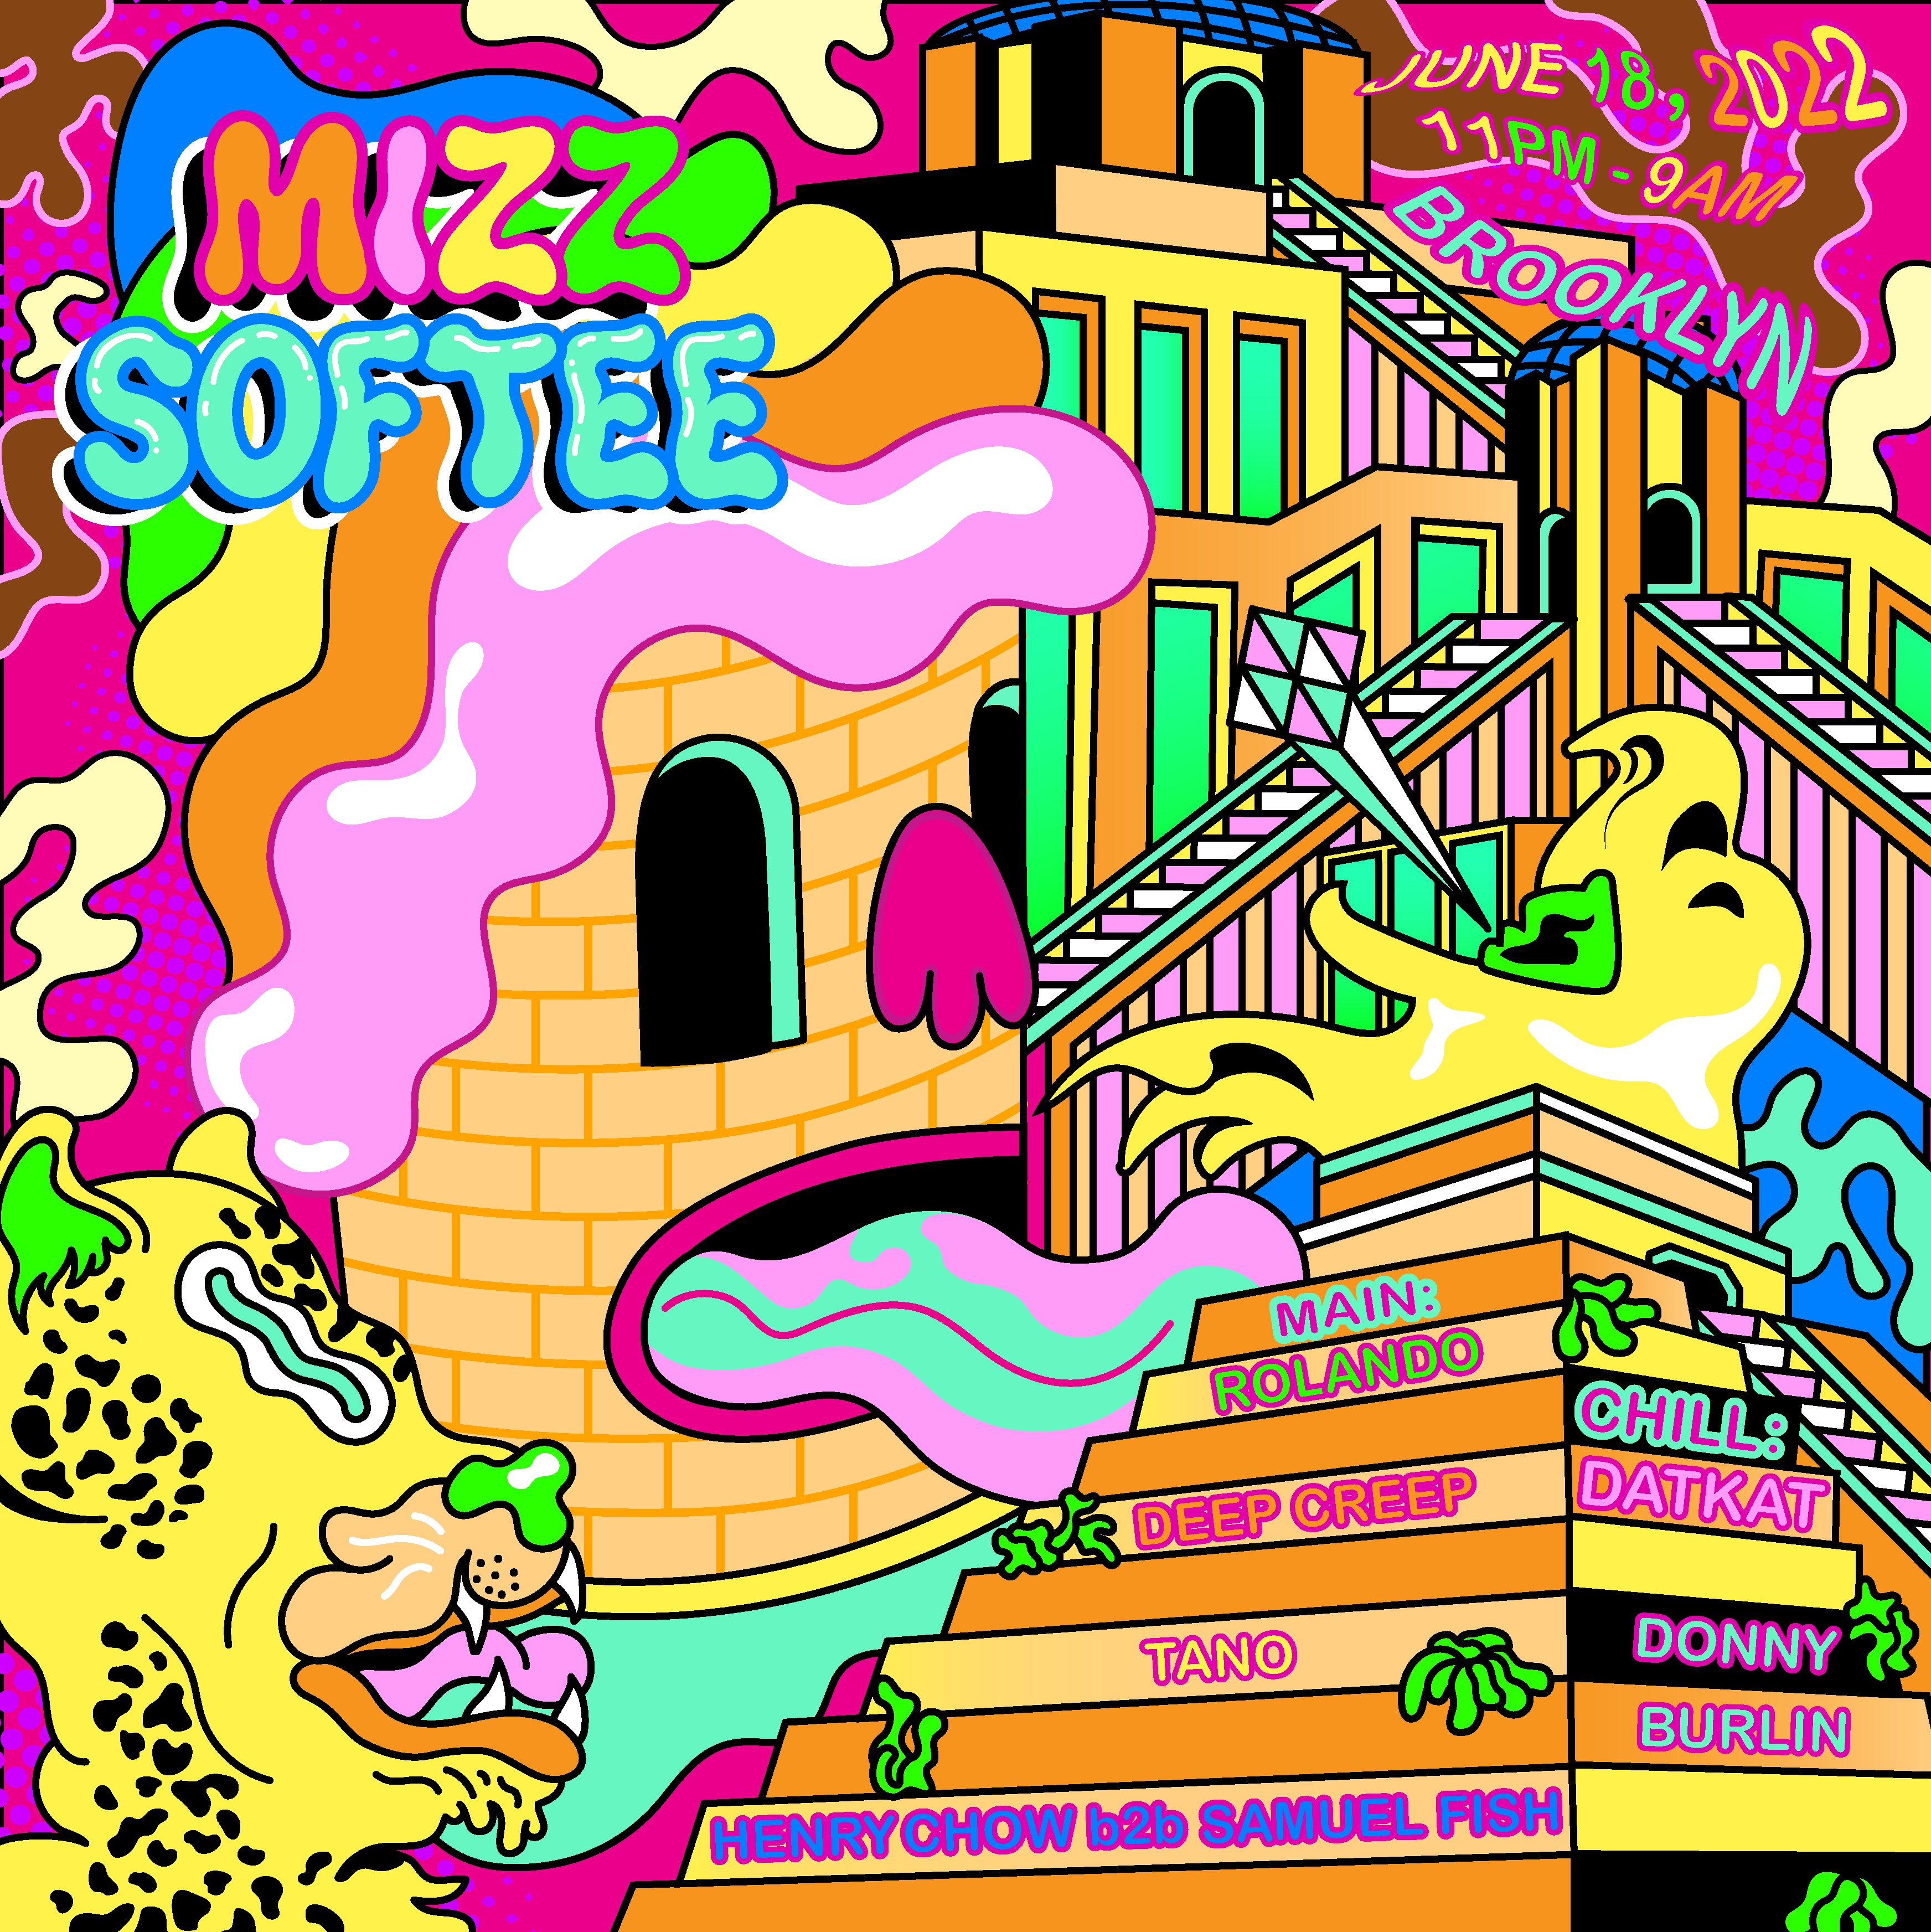 Mizz Softee: DJ Rolando, Tano, Deep Creep, DatKat, Donny Burlin, Henry Chow, Samuel Fish - Flyer front